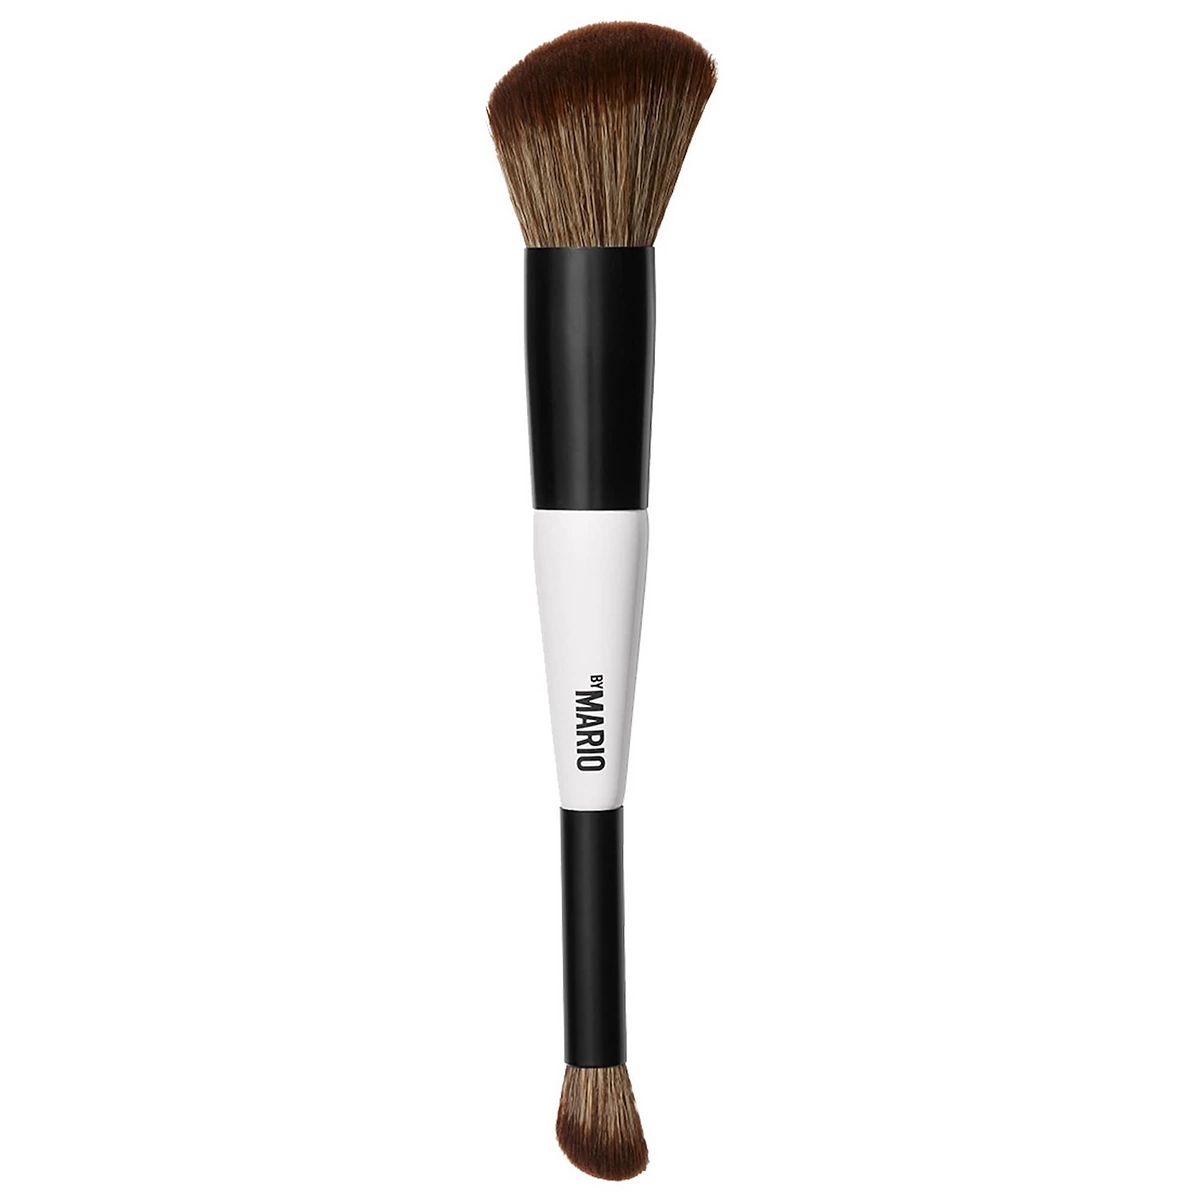 MAKEUP BY MARIO F1 Makeup Brush | Kohl's